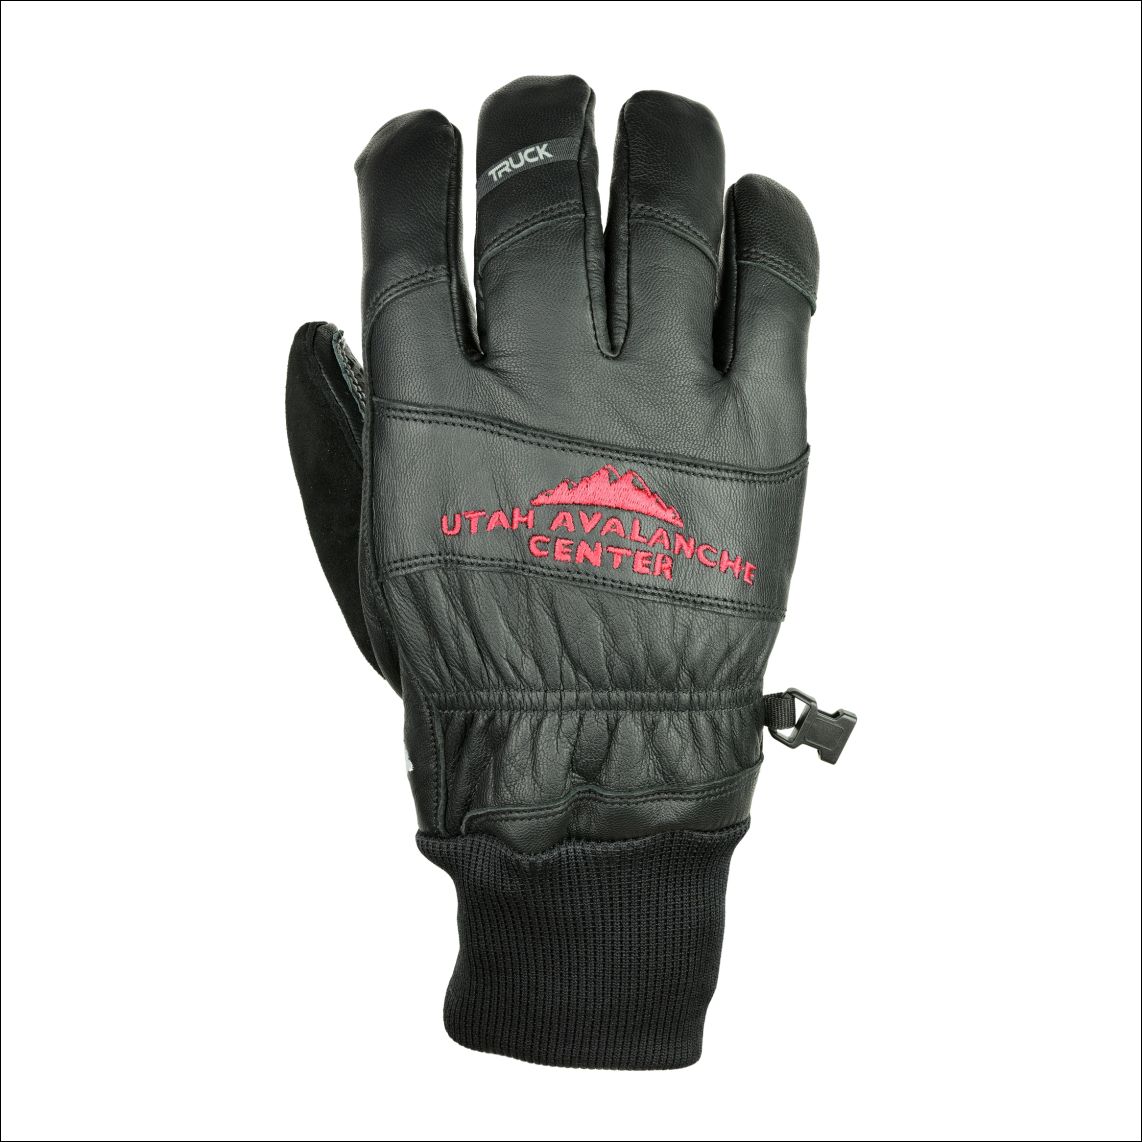 TRUCK Gloves: UAC M1 Pro